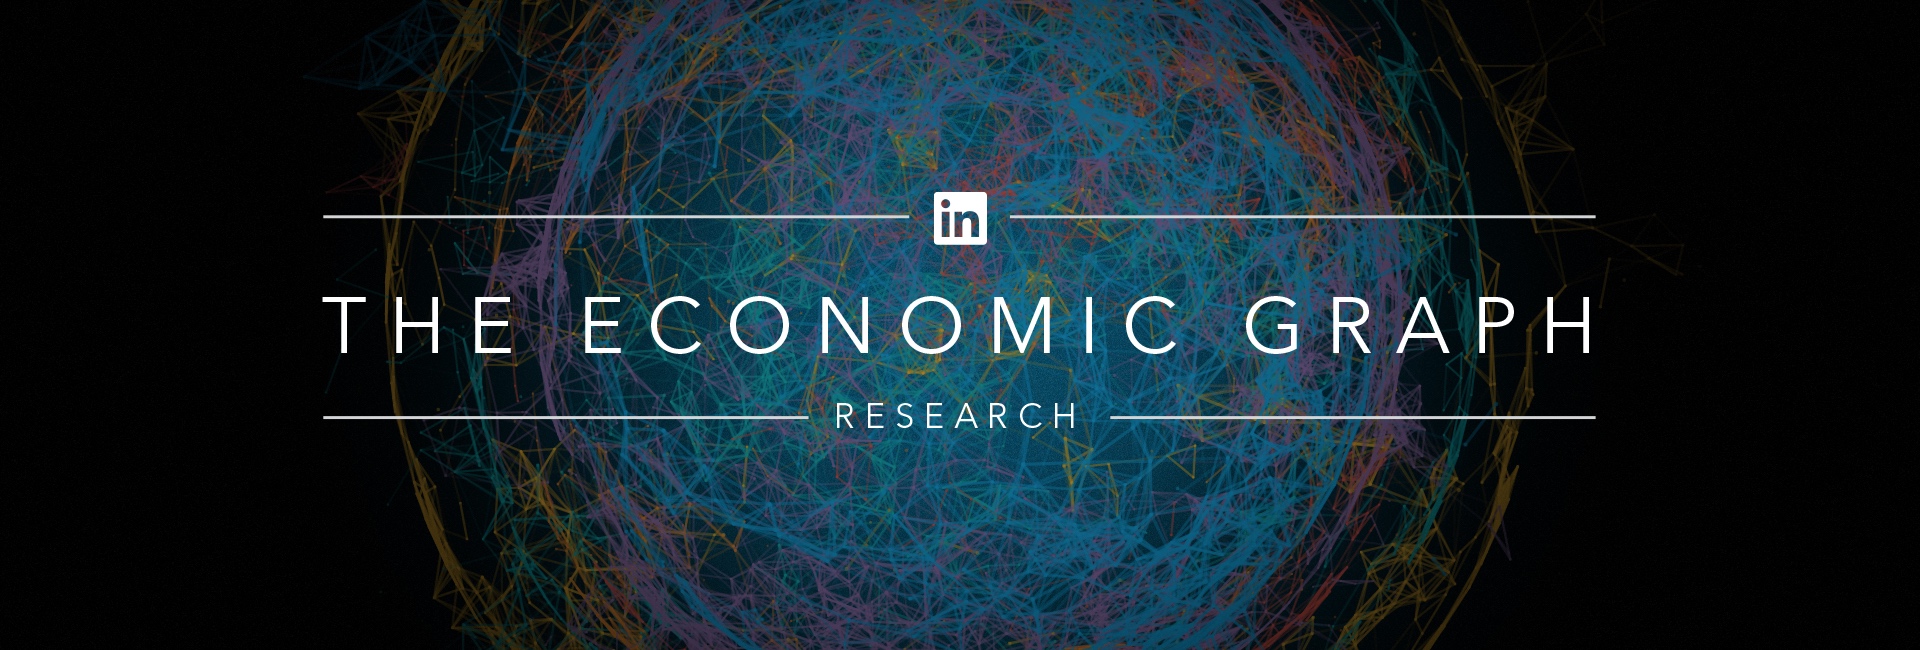 Economic-Graph-Research-program-banner